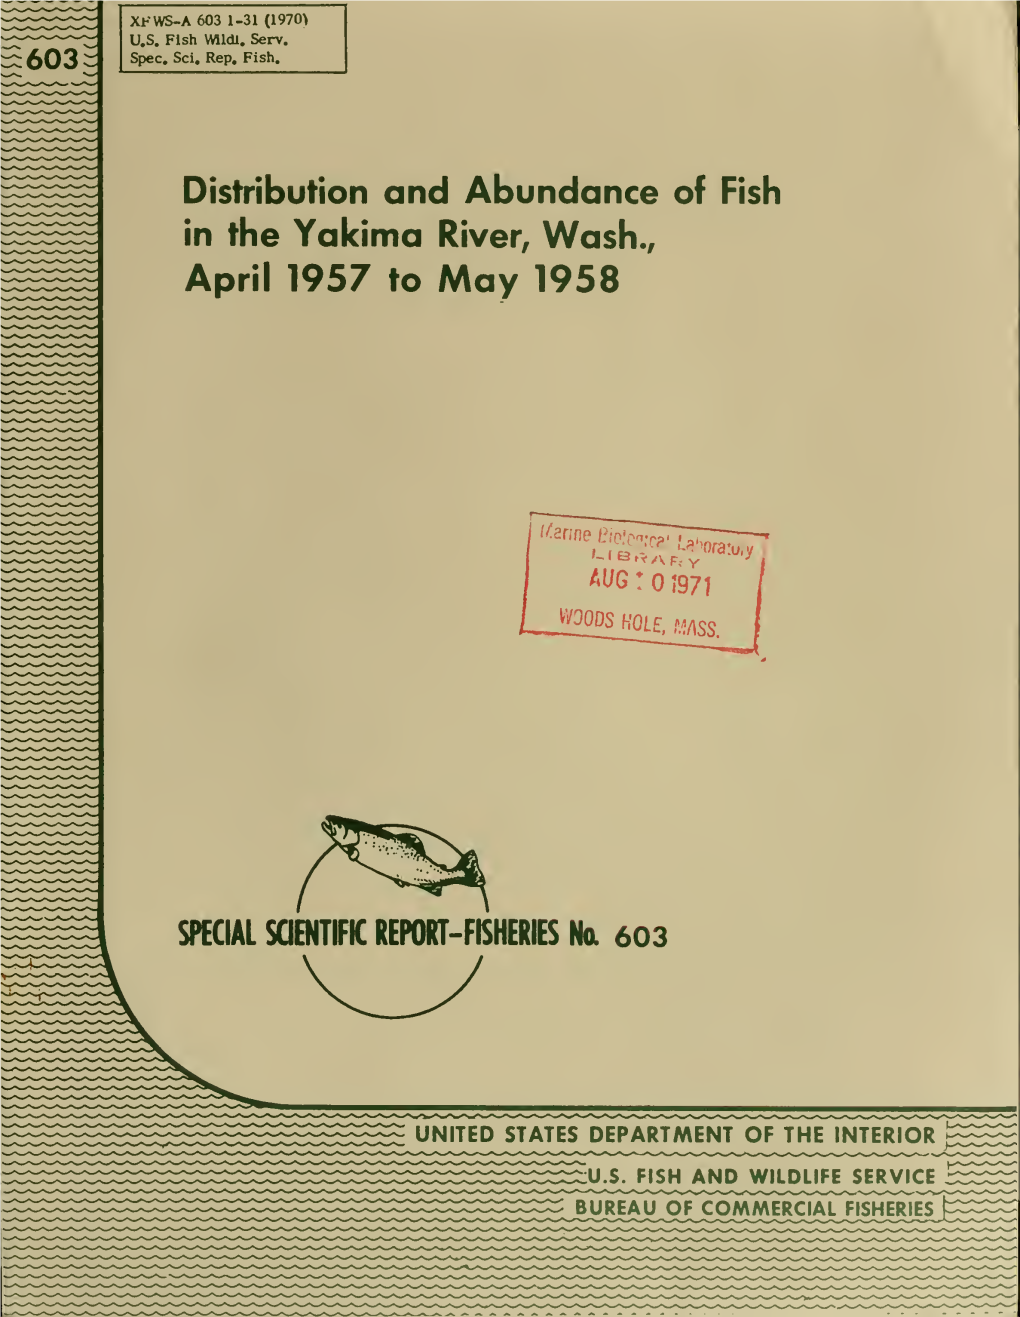 Special Scientific Report-Fisheries